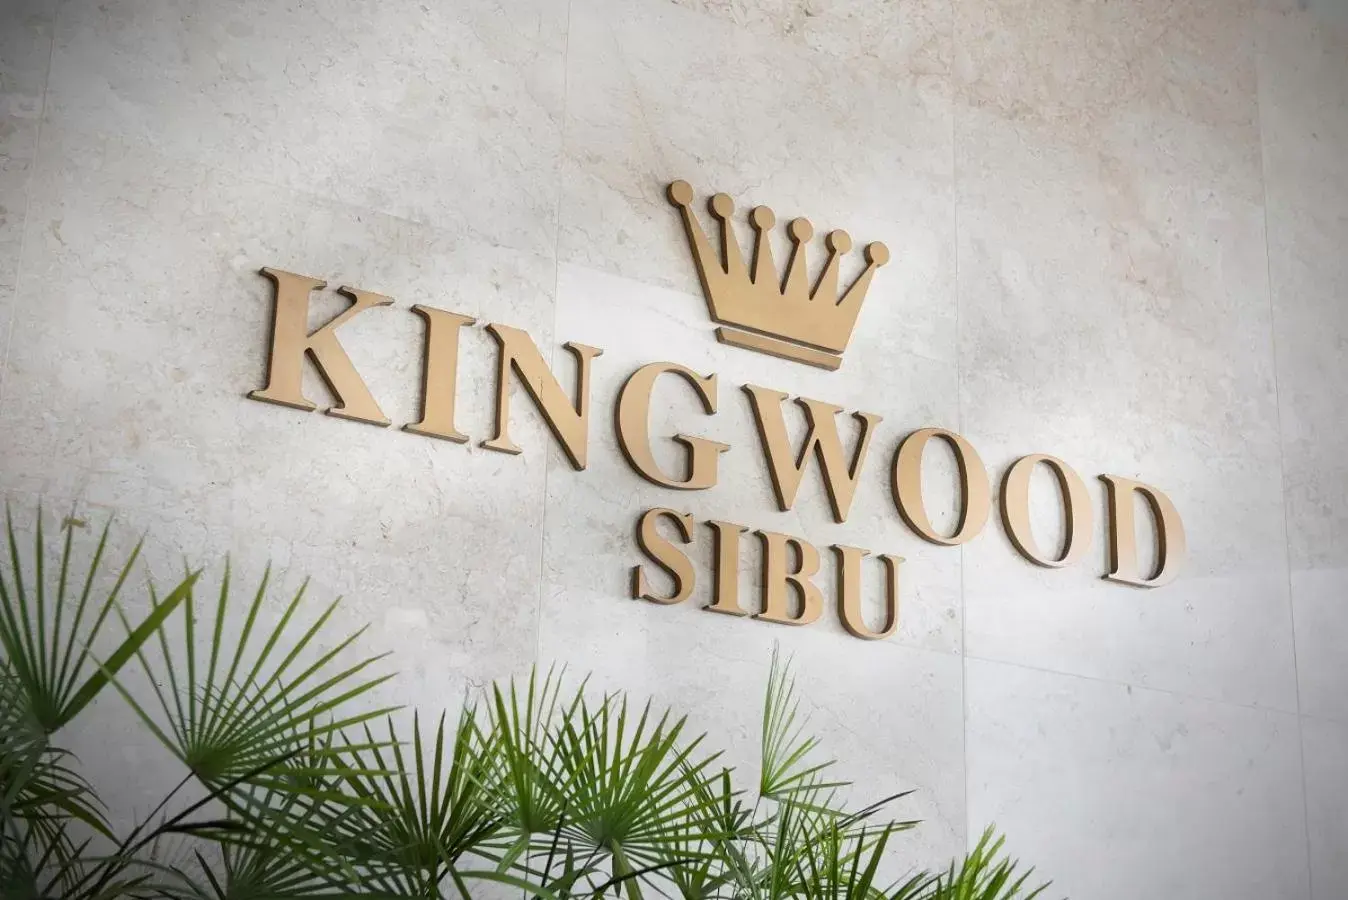 Property building in Kingwood Hotel Sibu